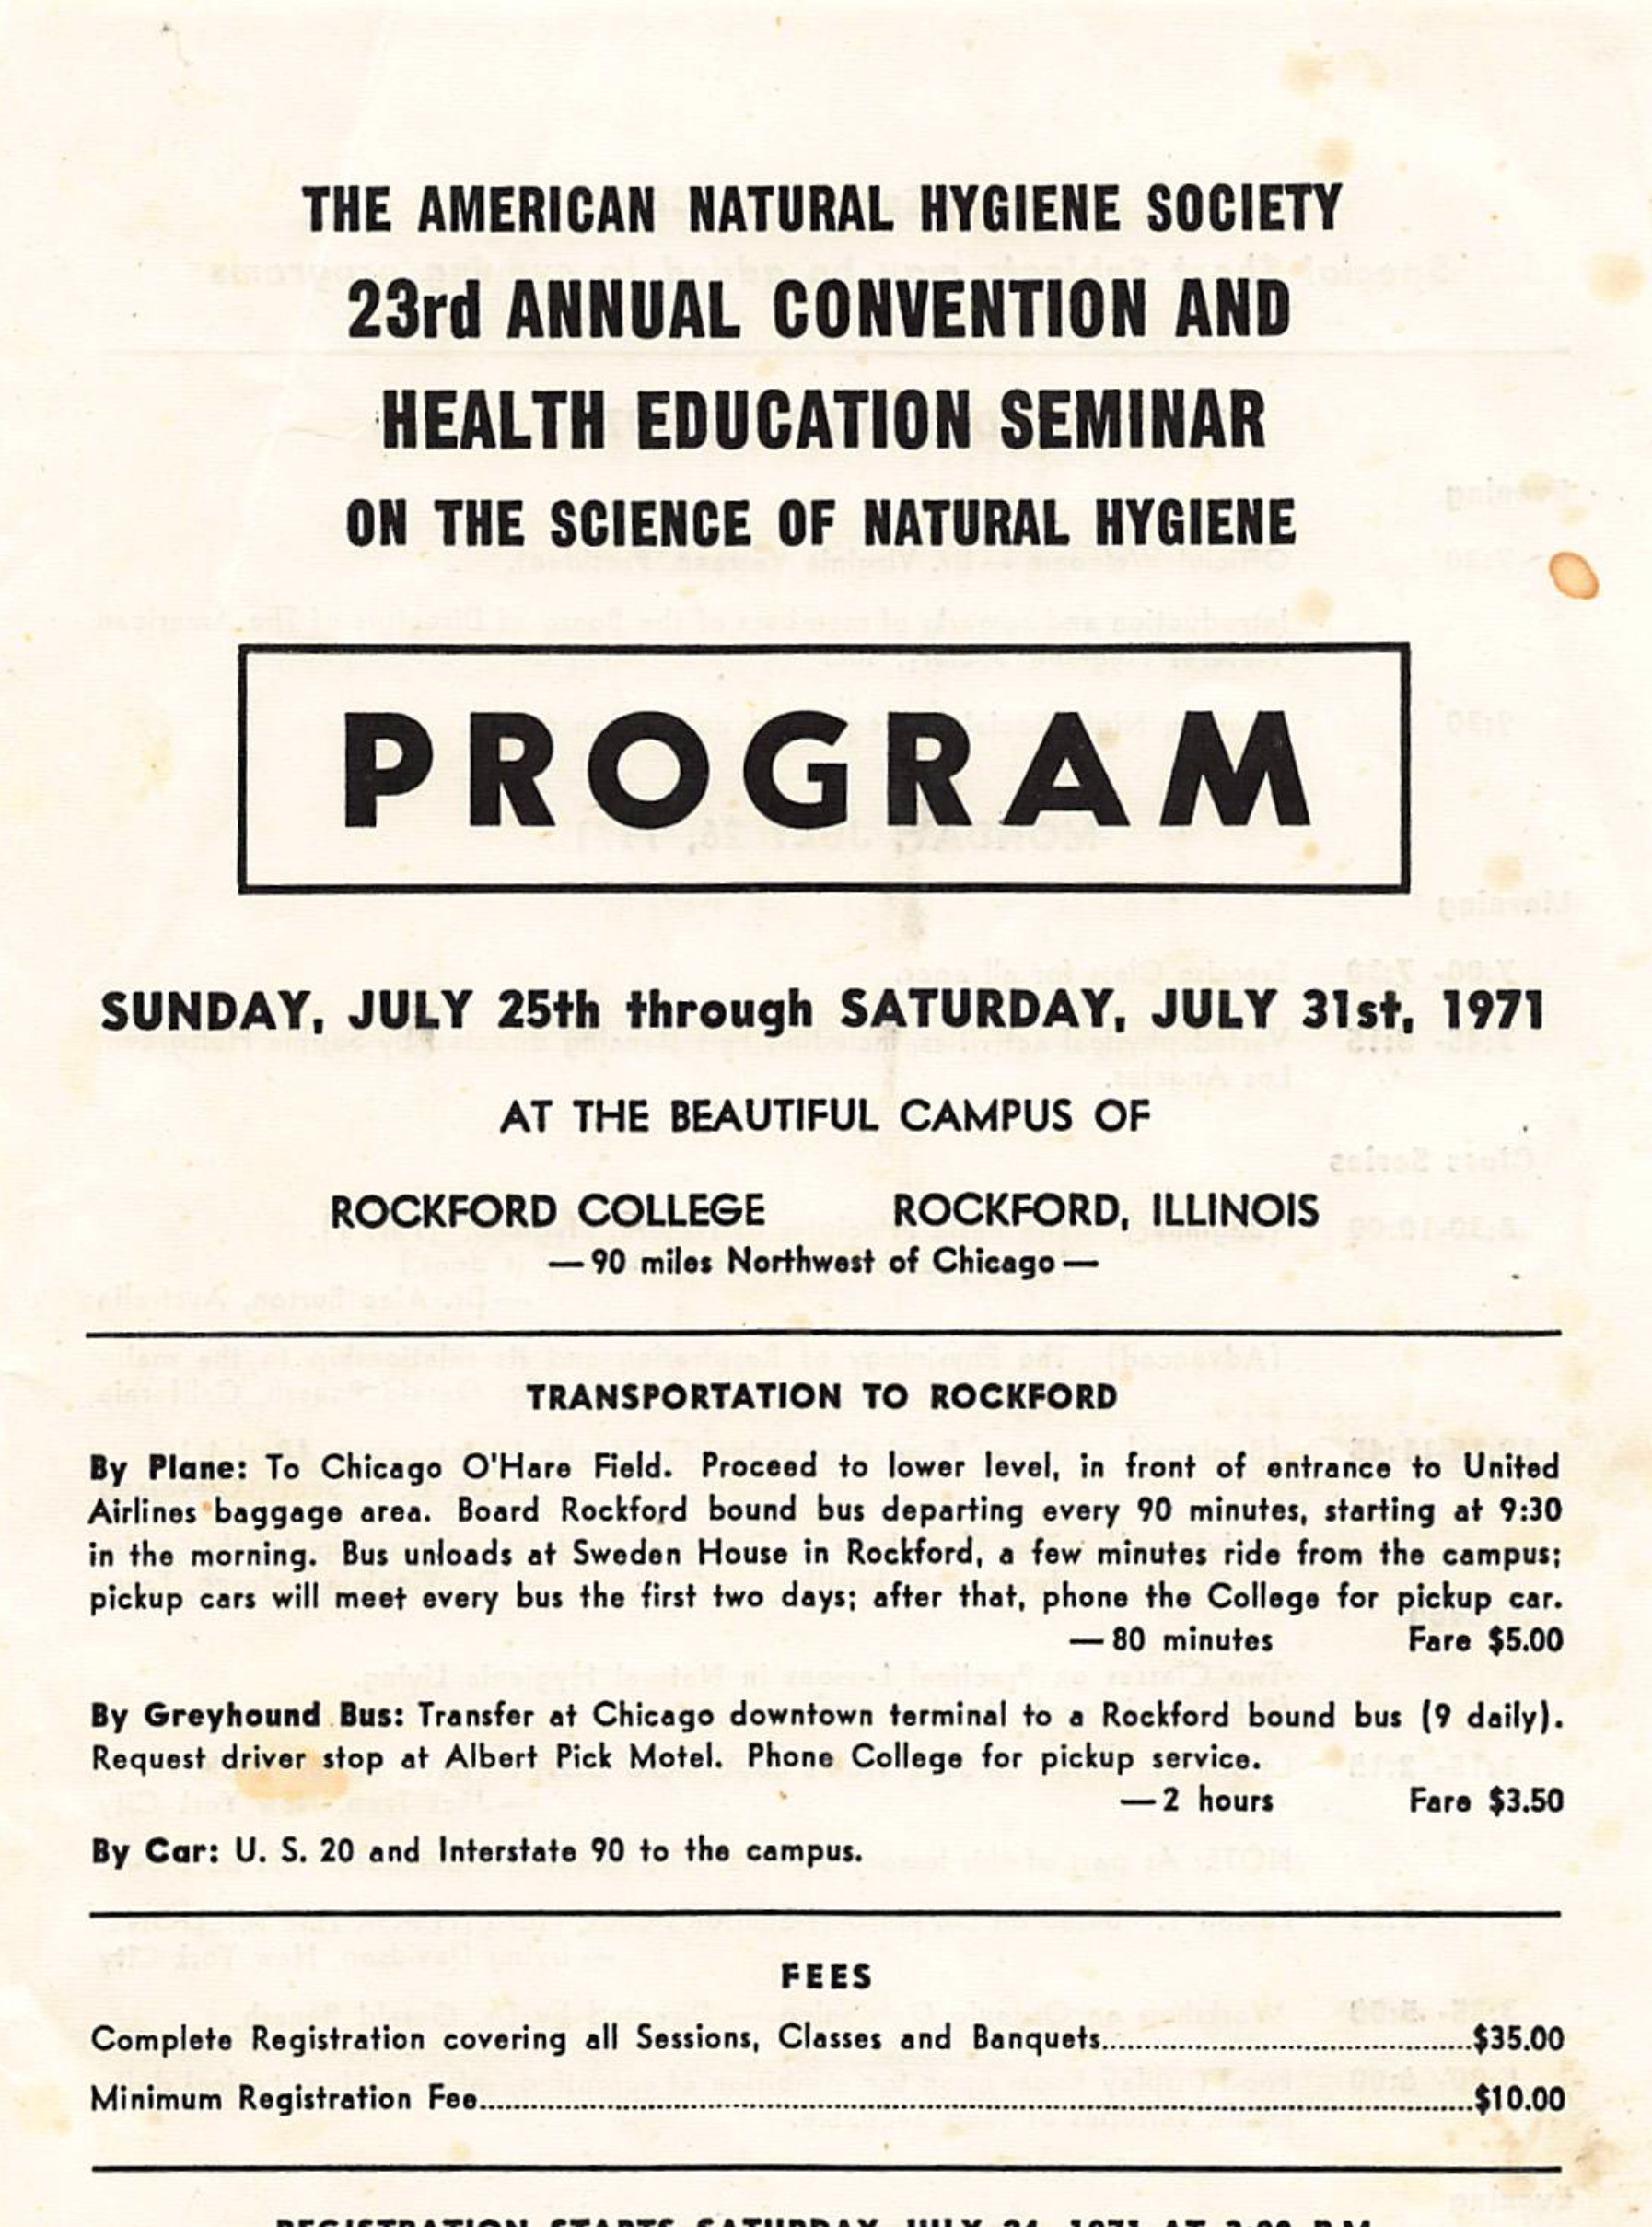 Conference Program. Illinois, 1971